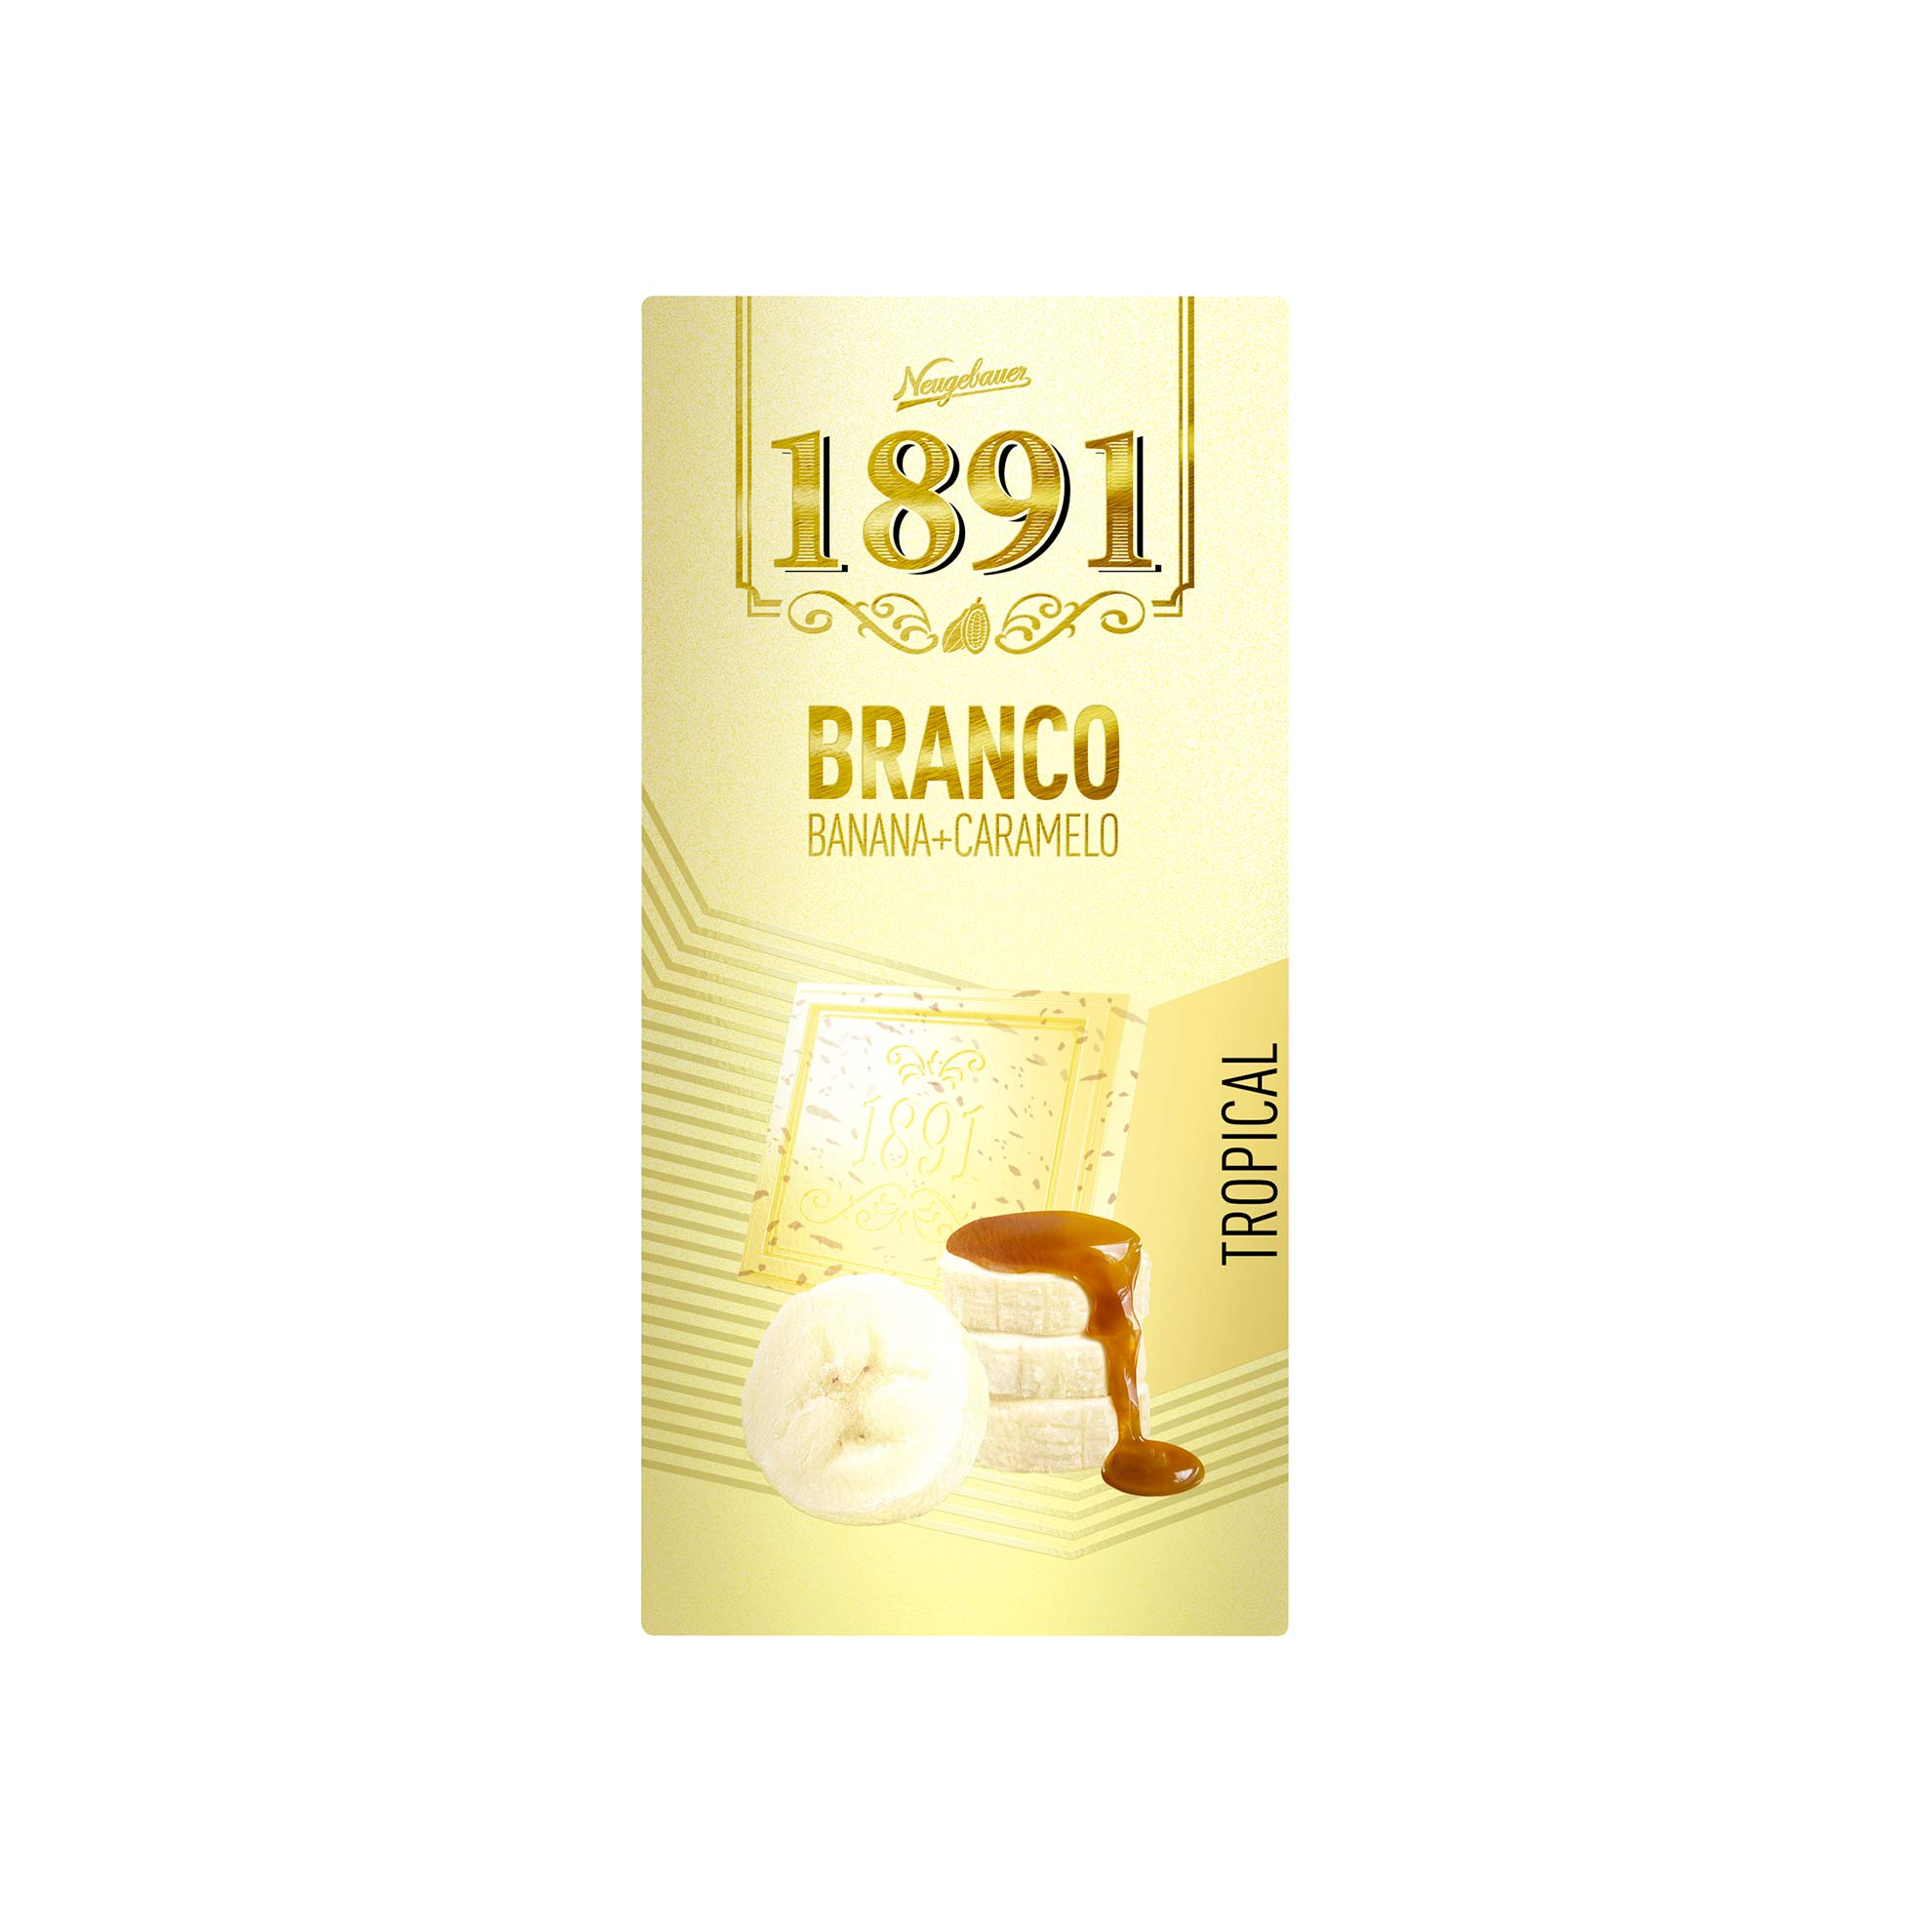 Chocolate 38% Cacau Trento 32g - Zaffari & Bourbon